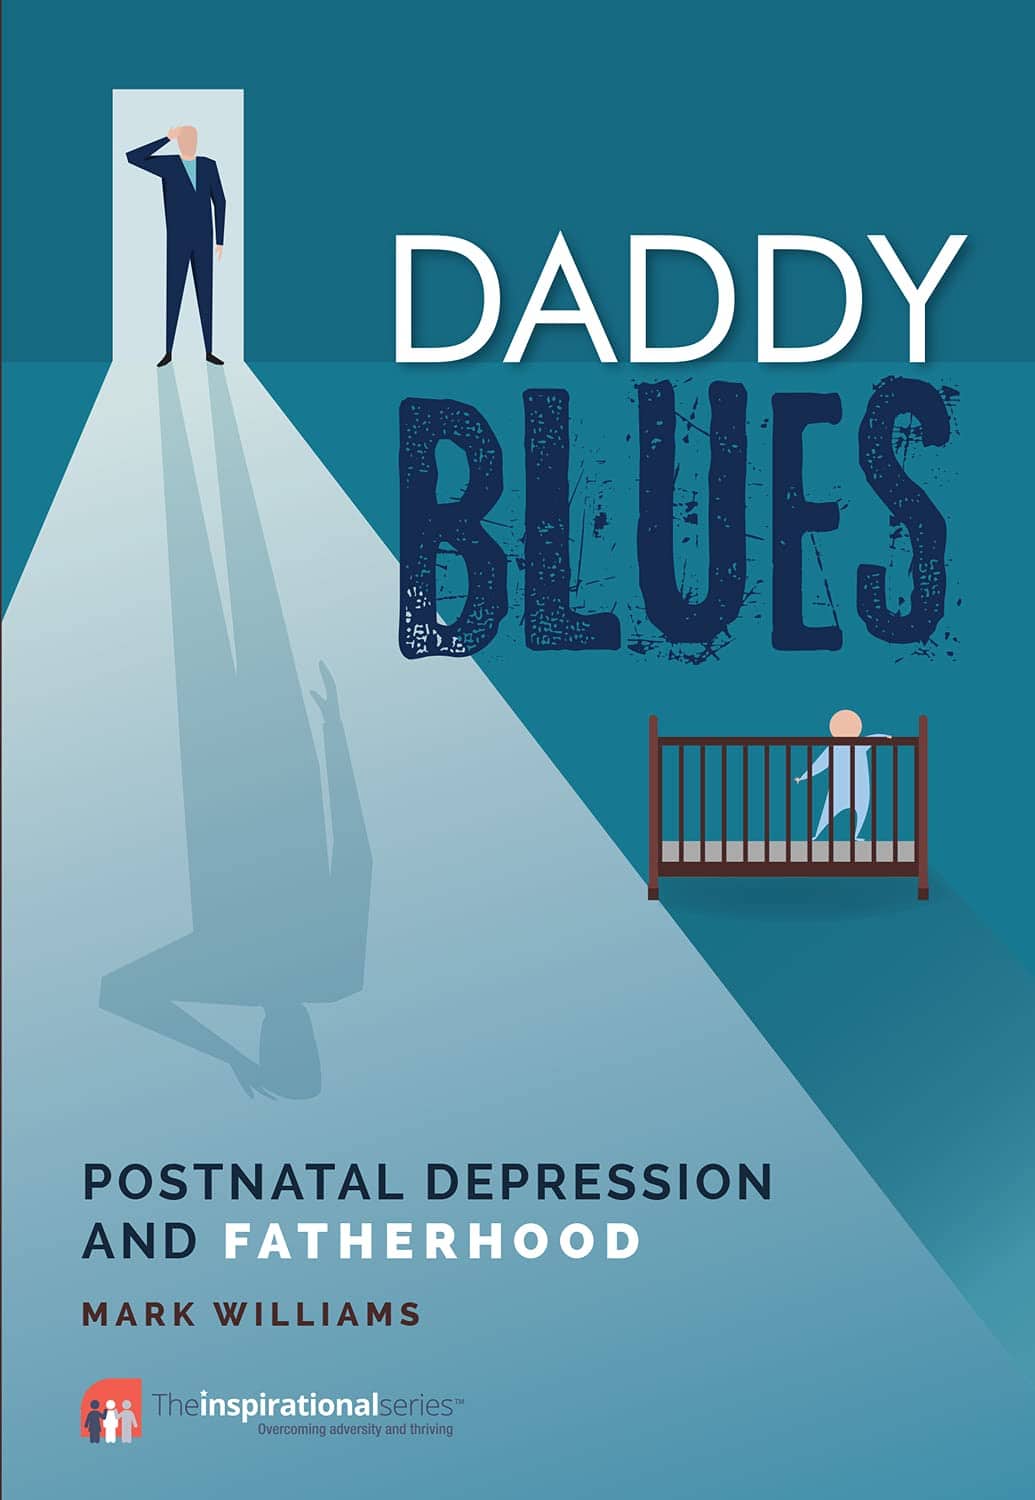 "Daddy Blues" by Mark Williams